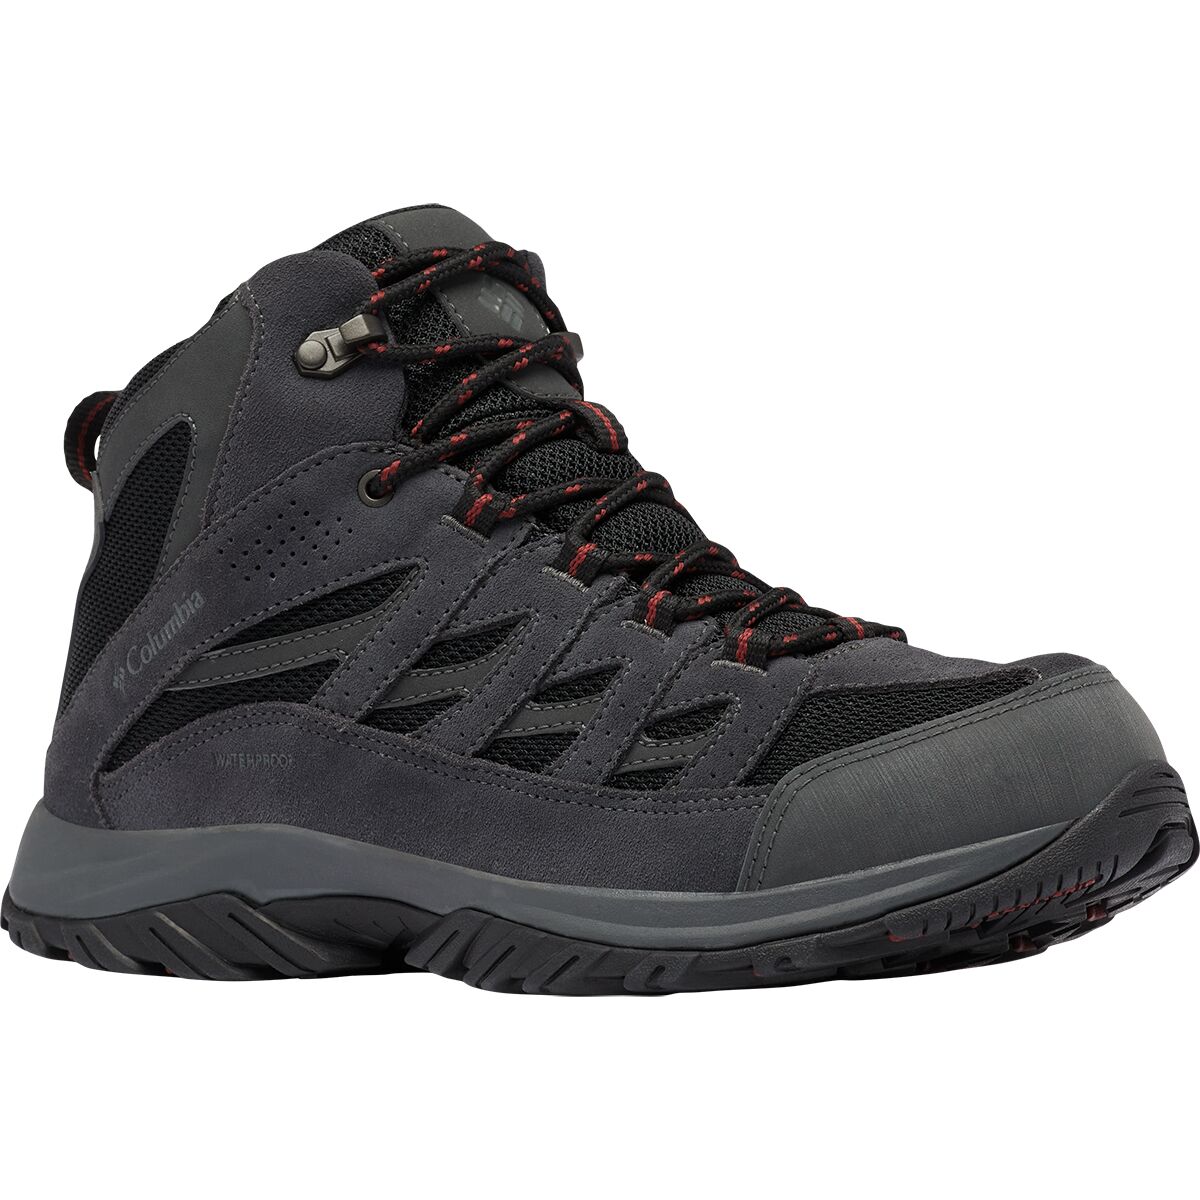 Crestwood Mid Waterproof Hiking Boot - Men